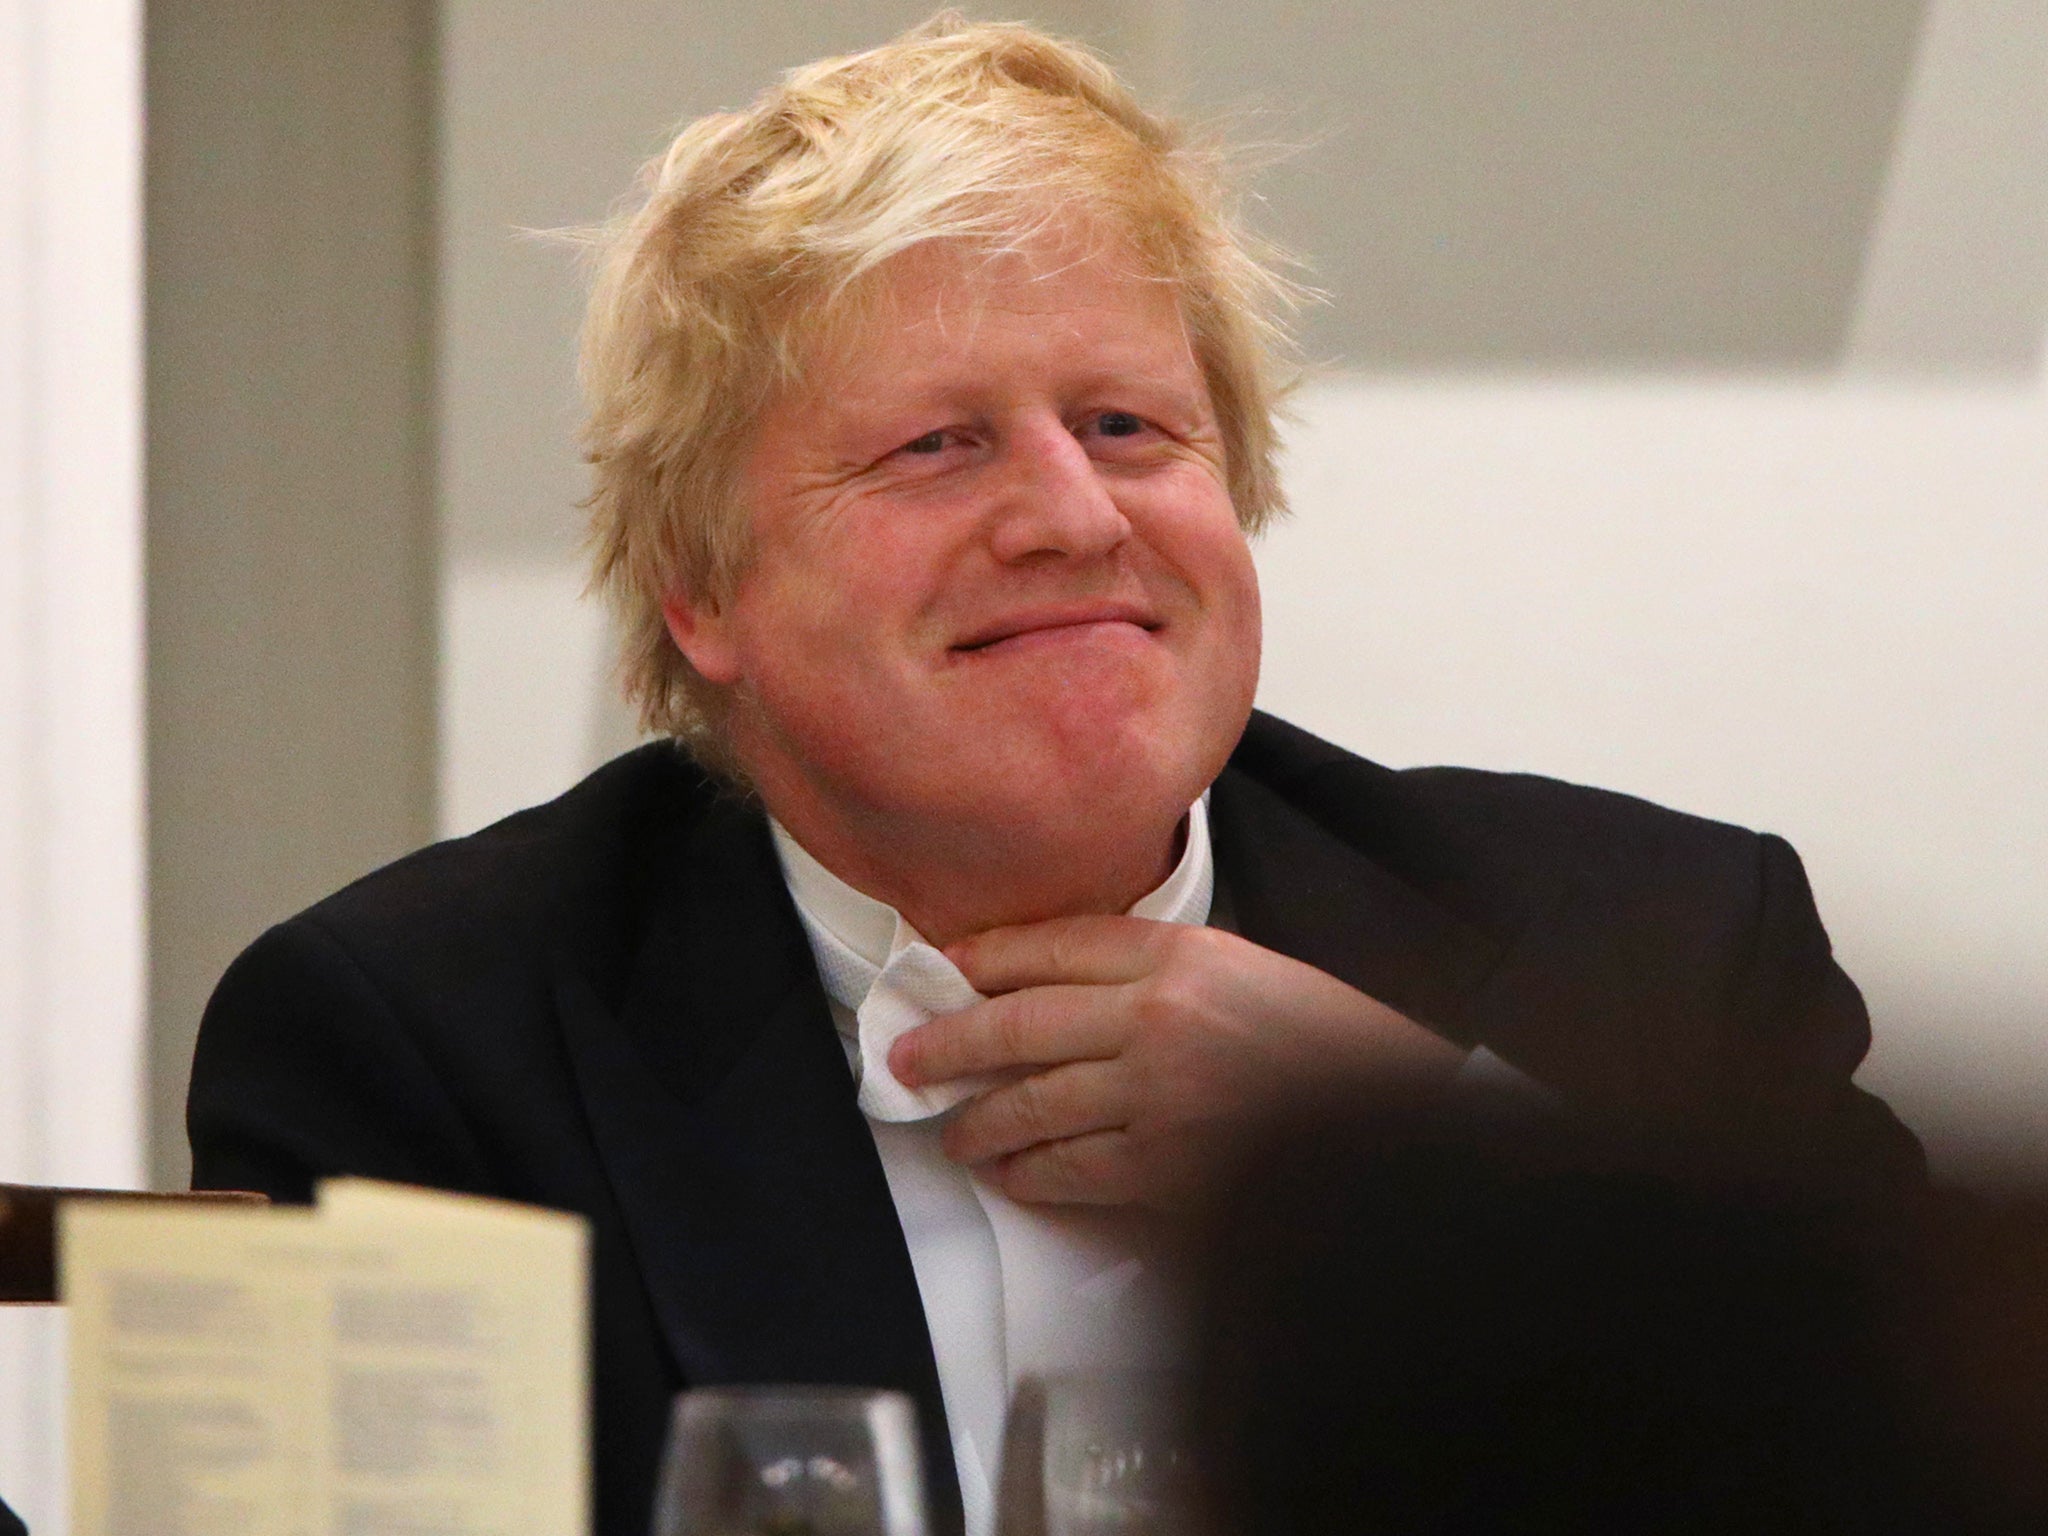 Foreign secretary Boris Johnson 'must go'